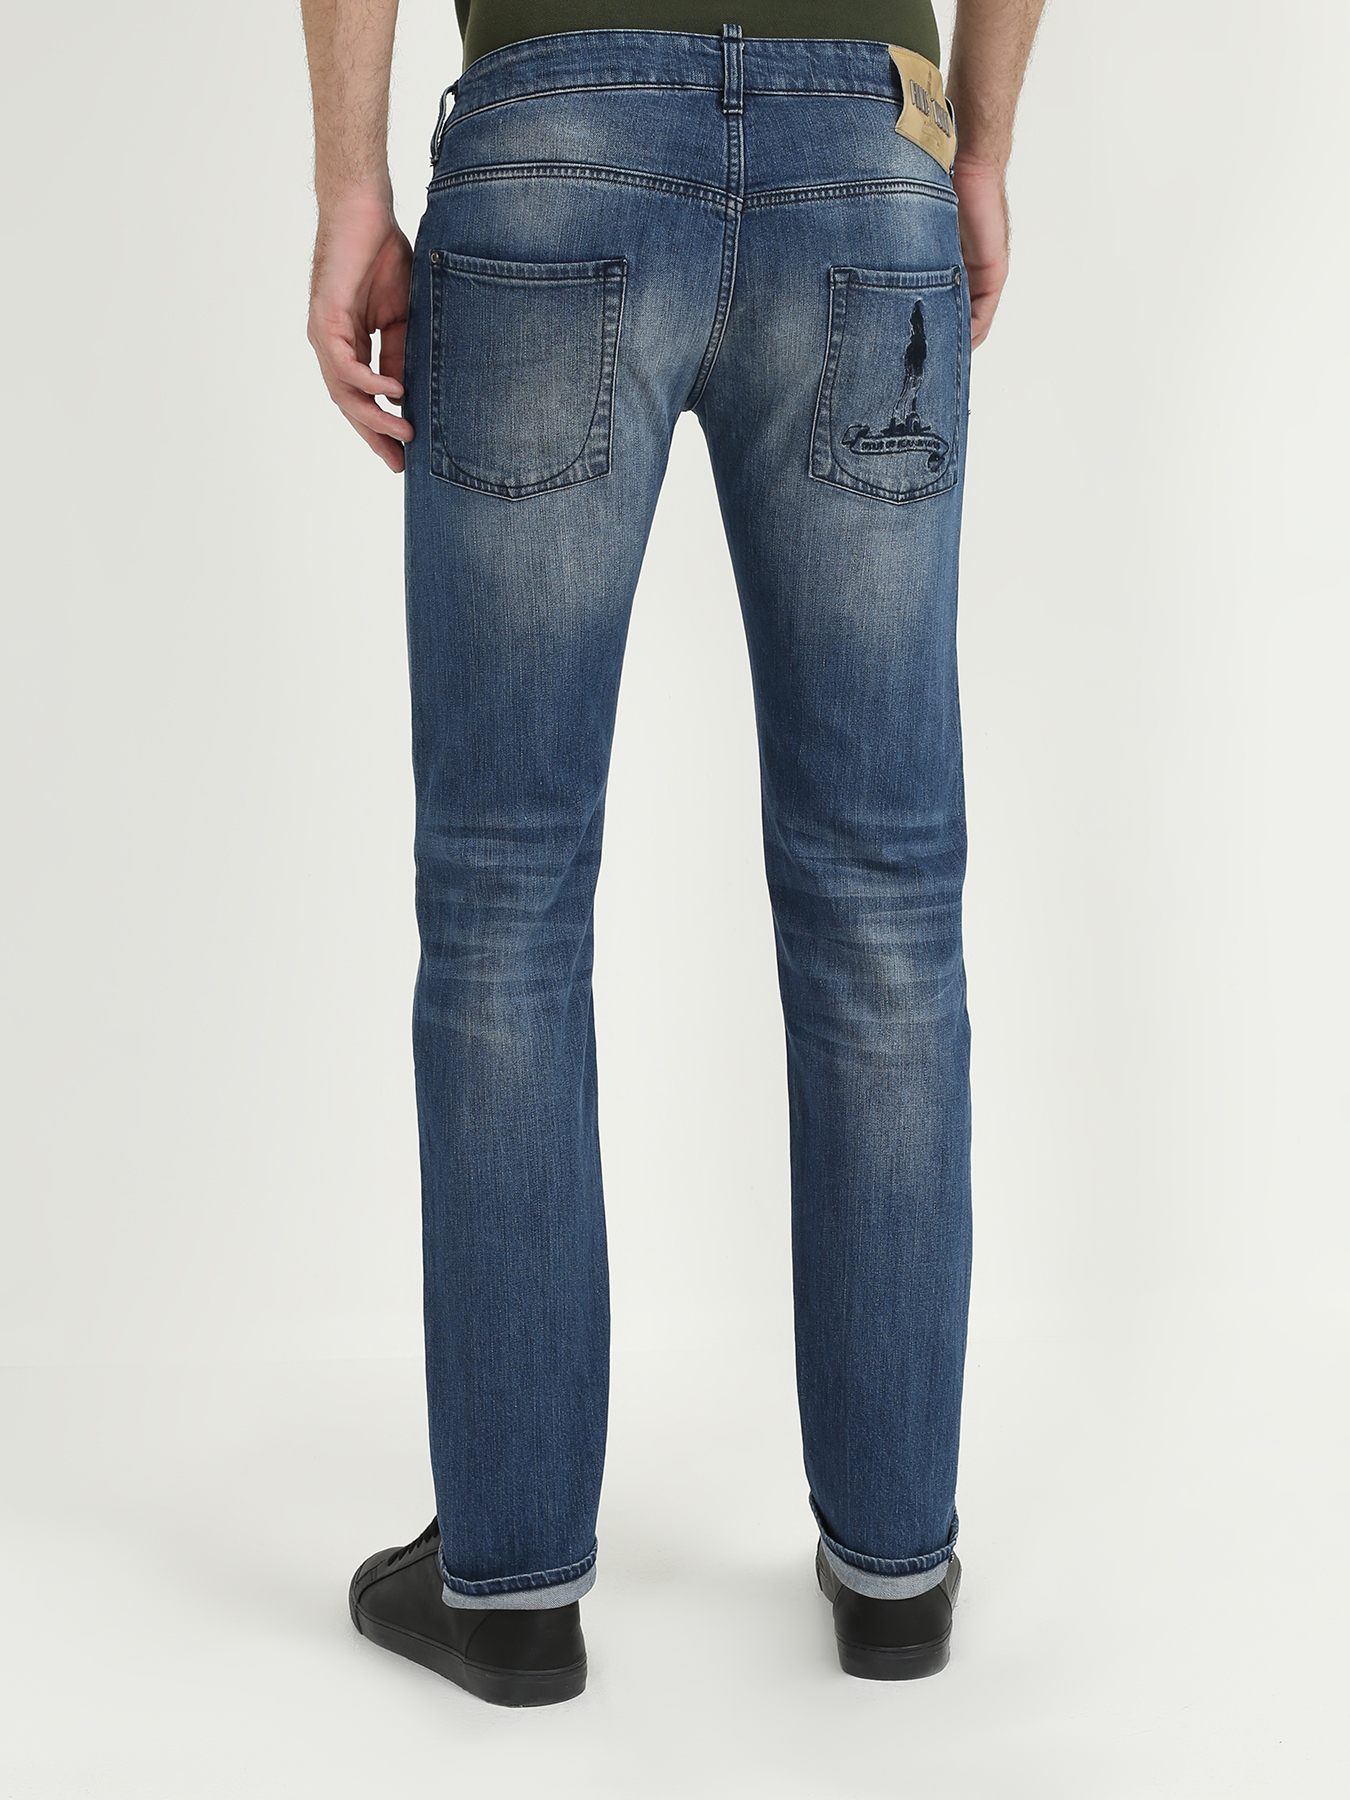 Finisterre Узкие мужские джинсы 323200-016 Фото 2